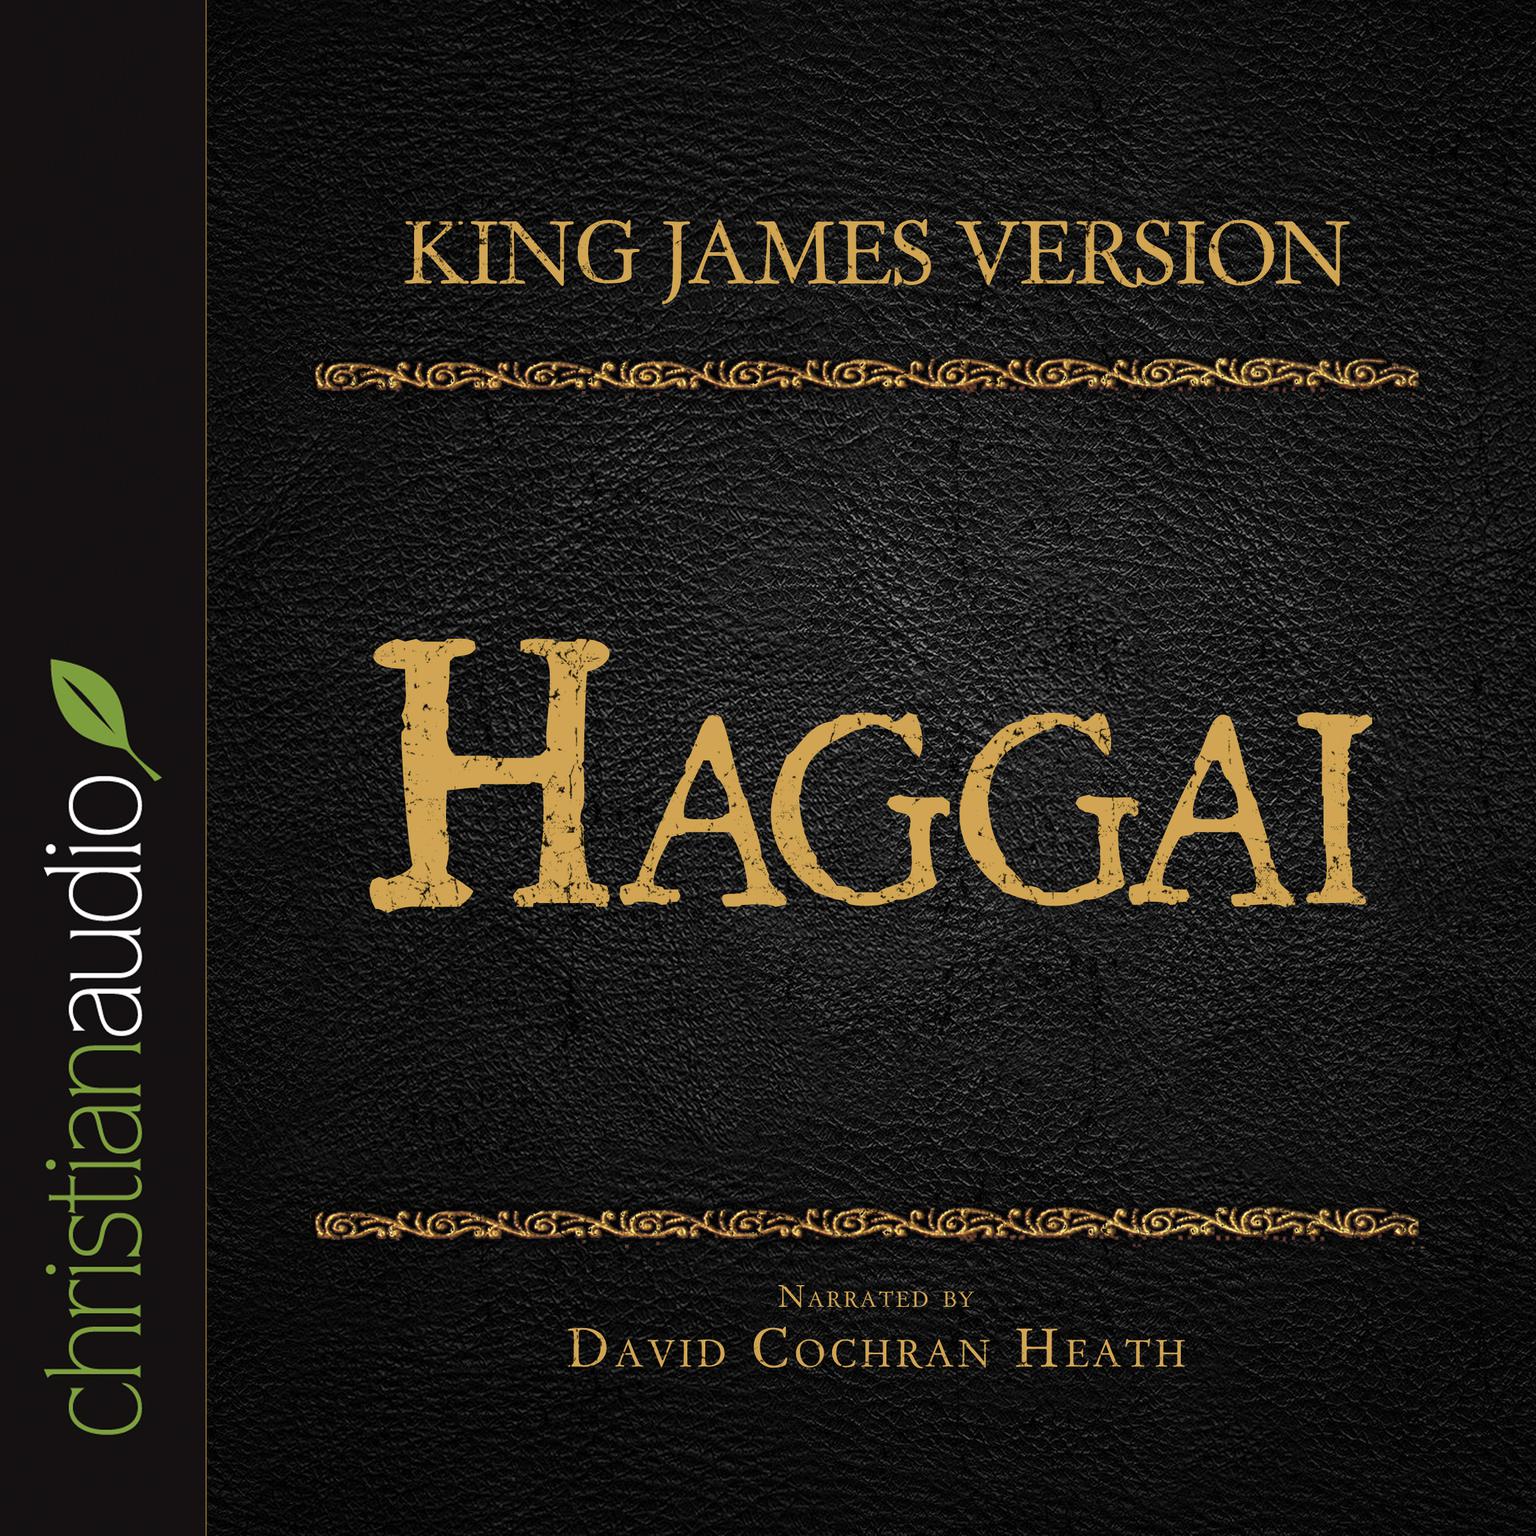 Holy Bible in Audio - King James Version: Haggai Audiobook, by David Cochran Heath